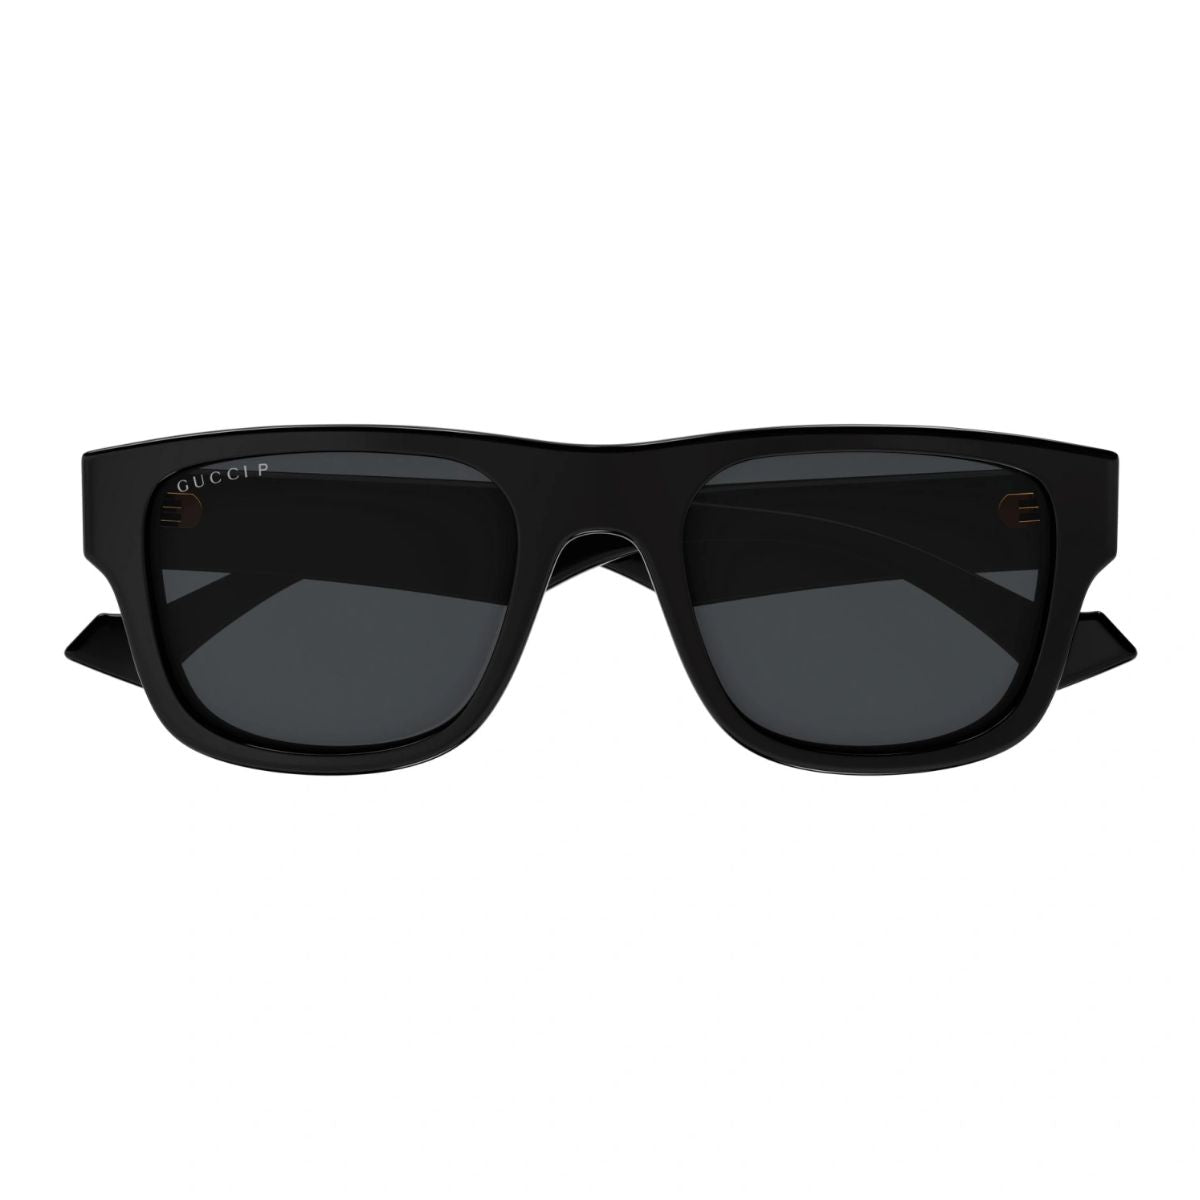 "Latest Trending Gucci Square Polarized Sunglasses For Men's At Optorium"